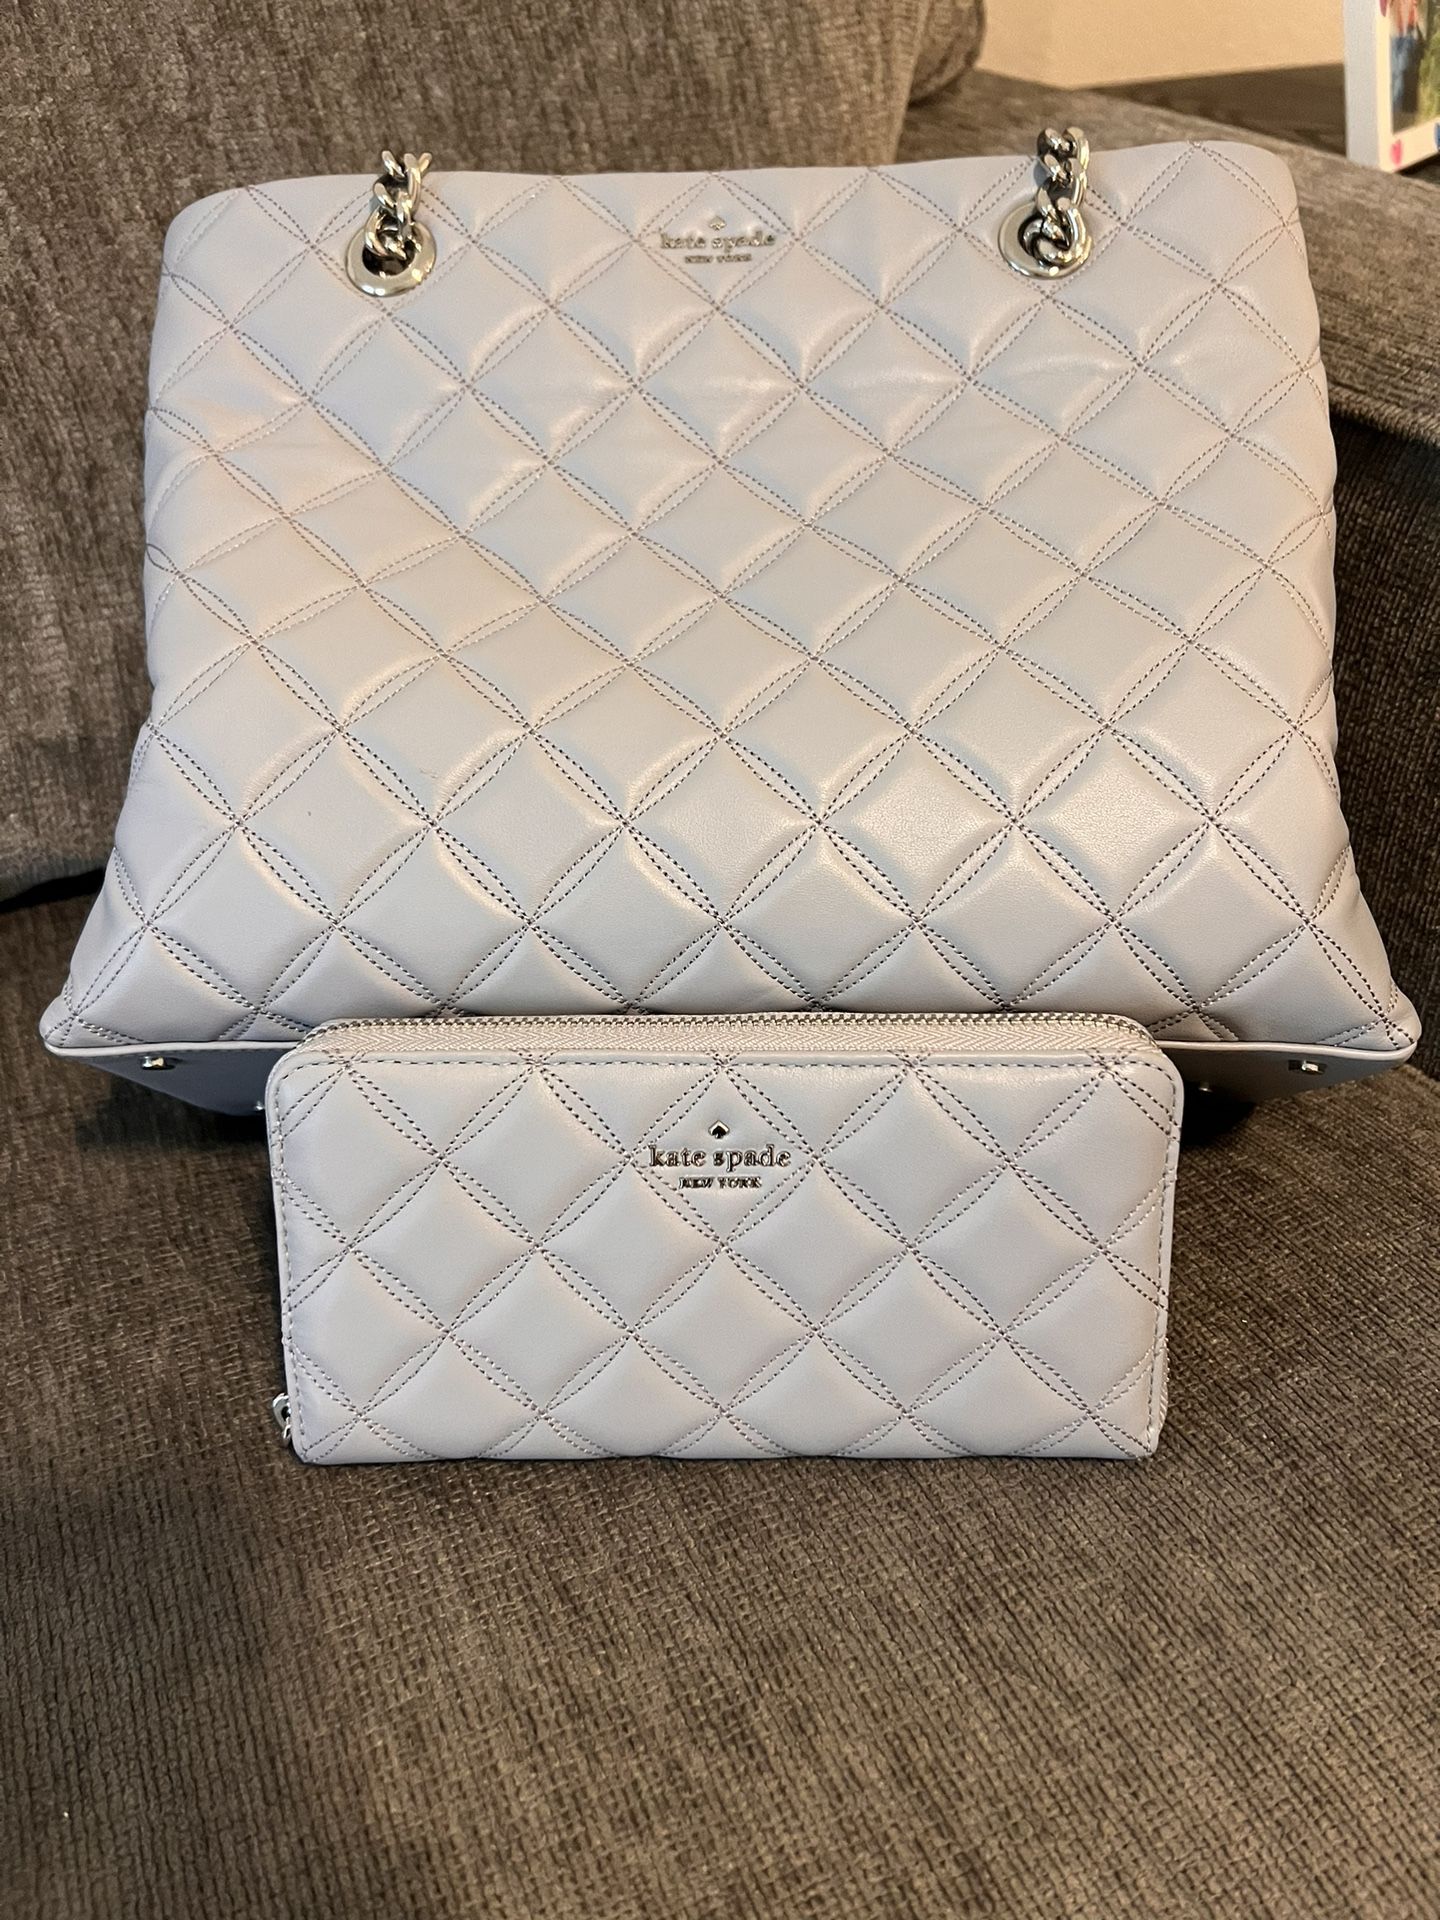 Kate Spade Bag And Matching Wallet 